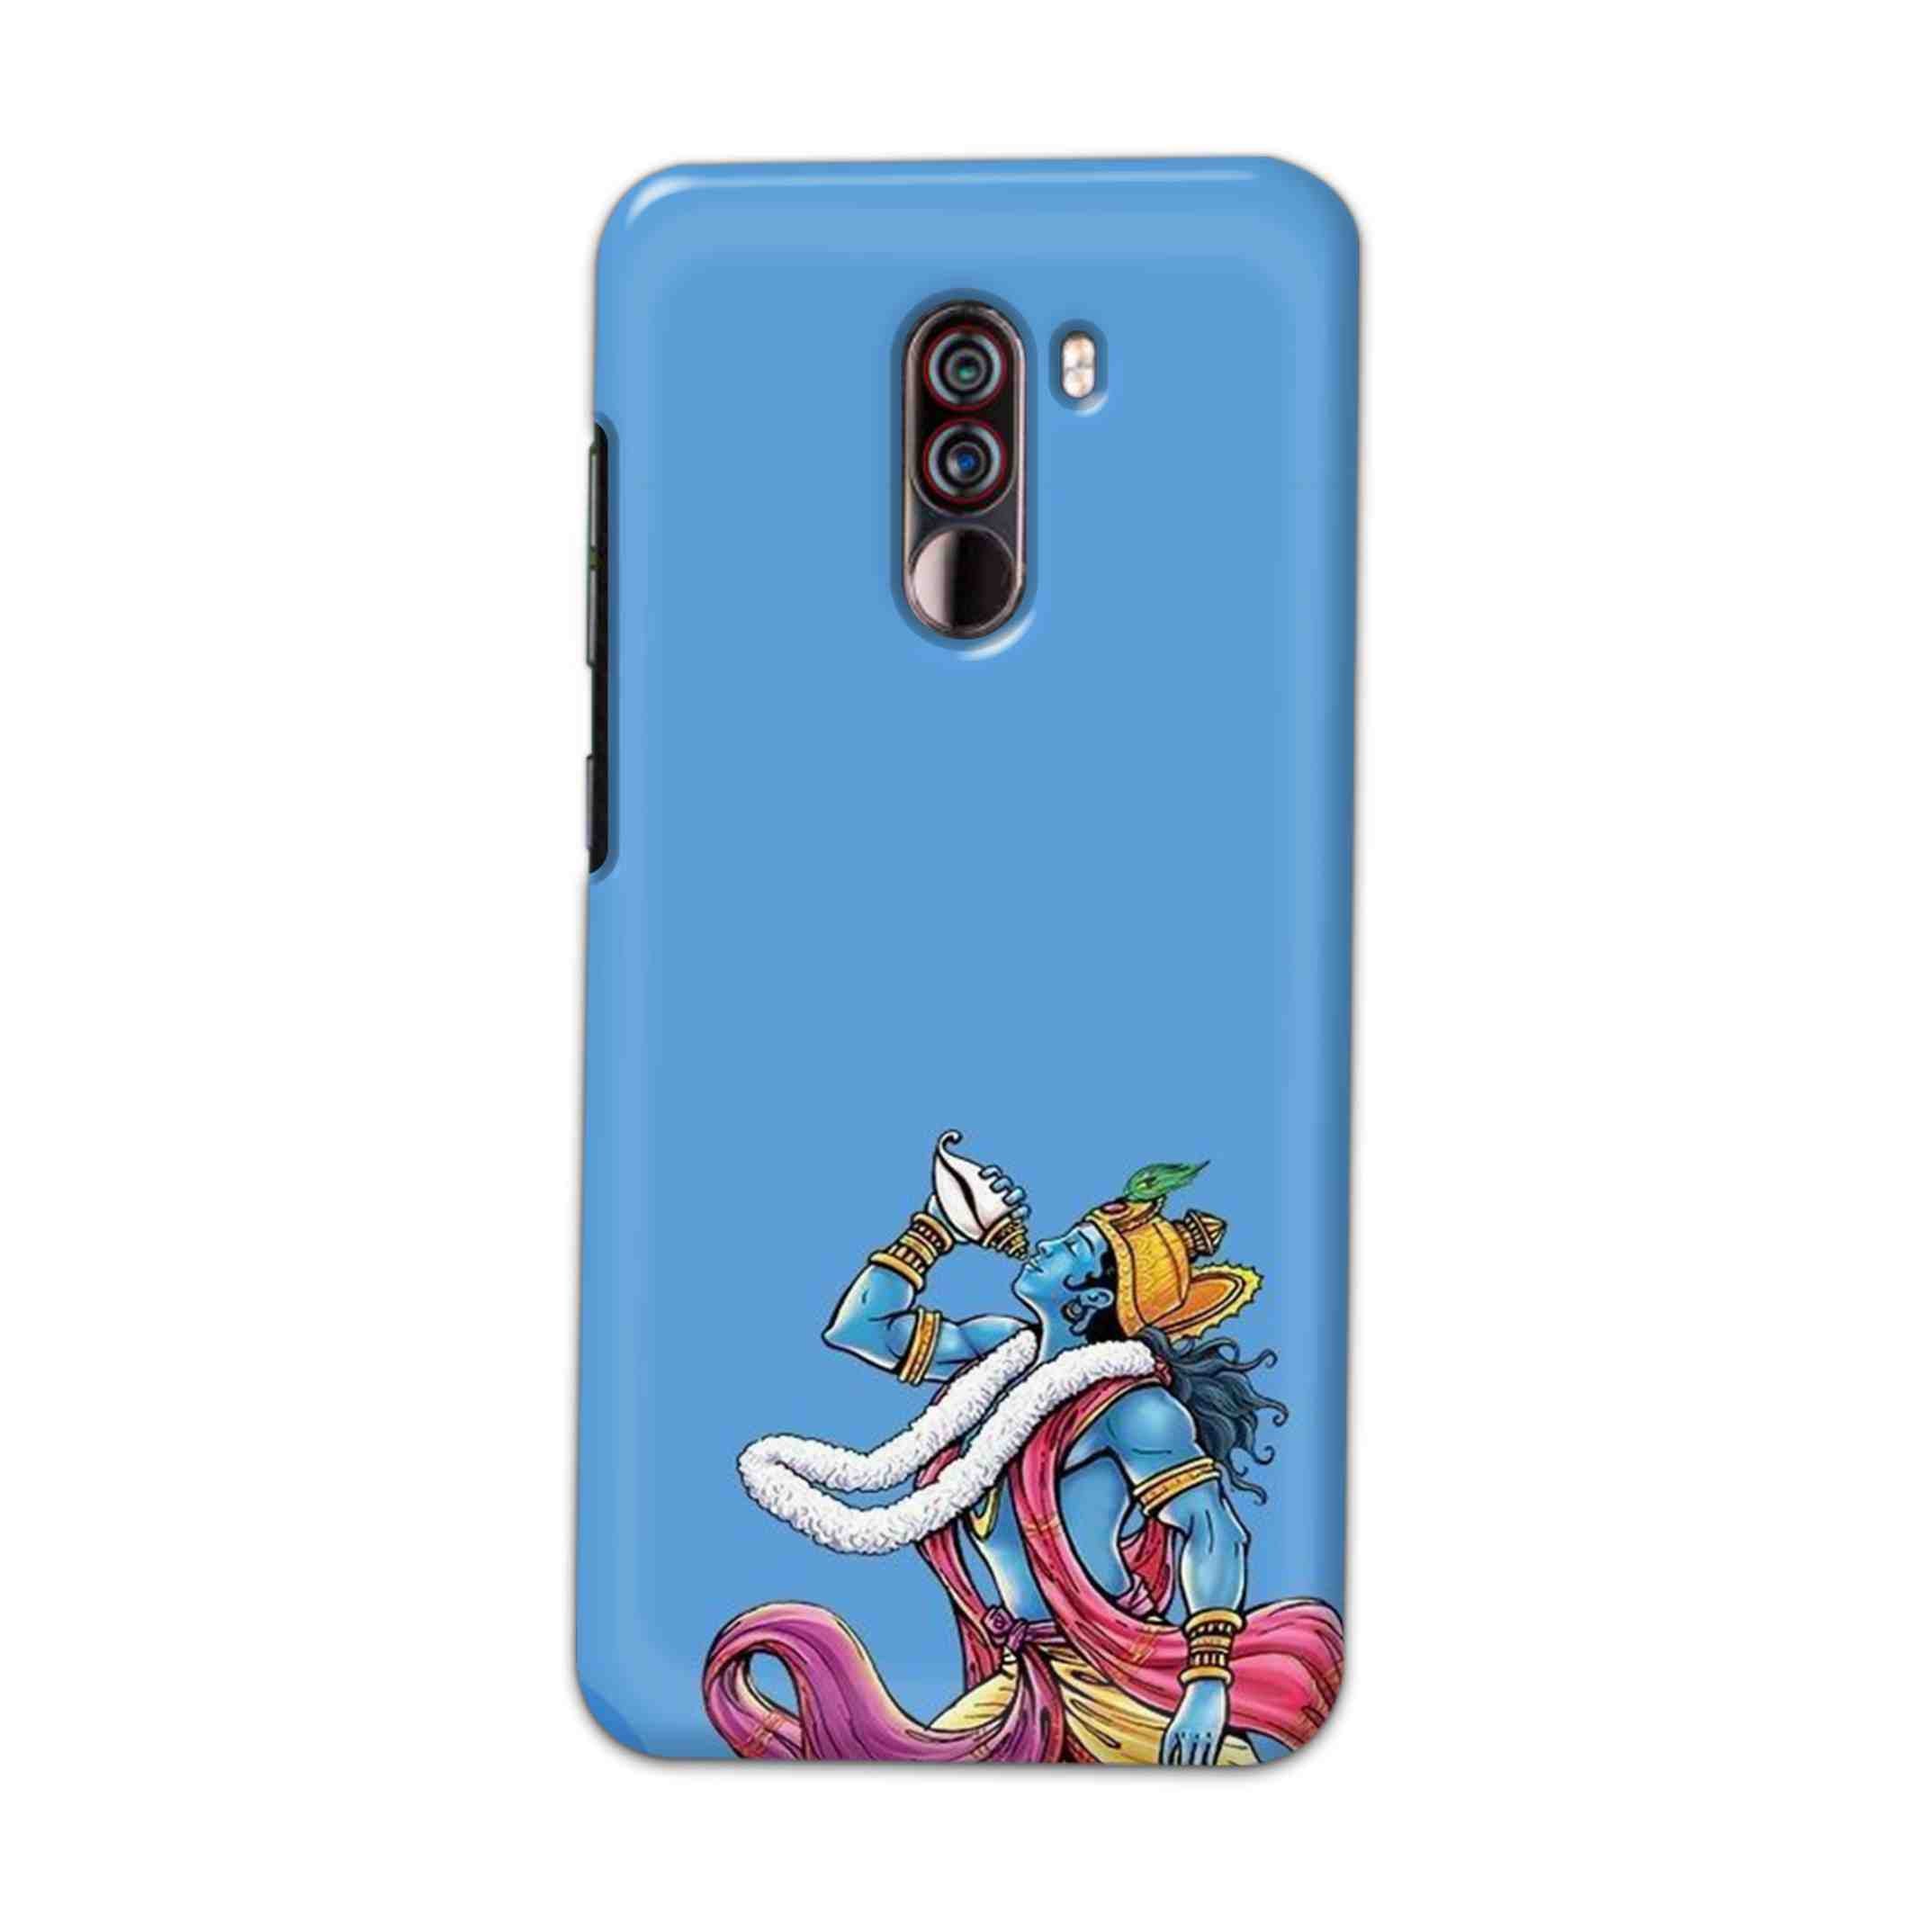 Buy Krishna Hard Back Mobile Phone Case Cover For Xiaomi Pocophone F1 Online